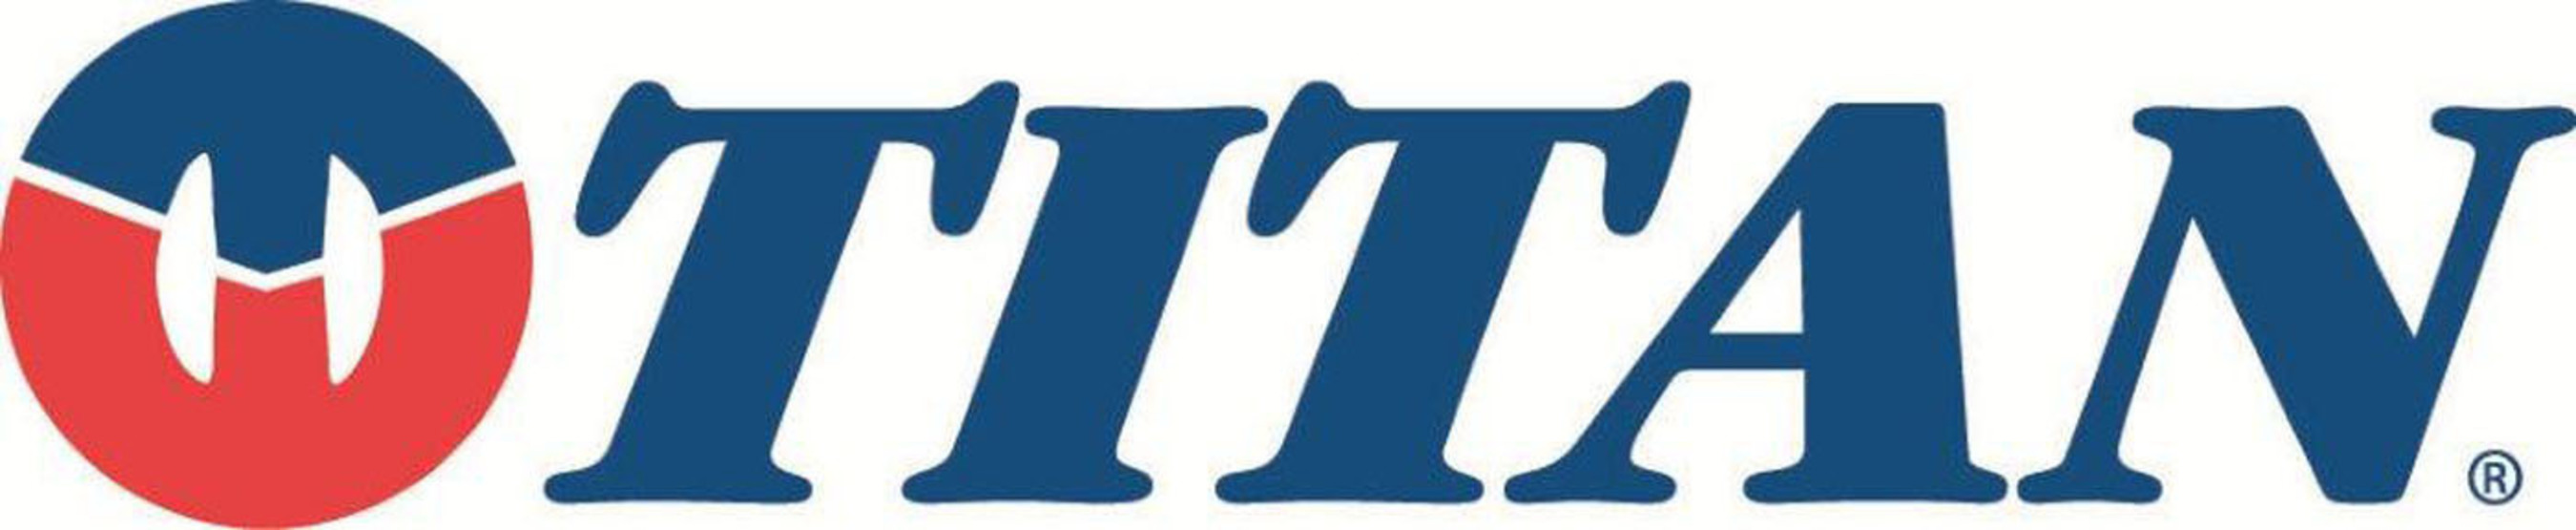 Titan International, Inc. logo.